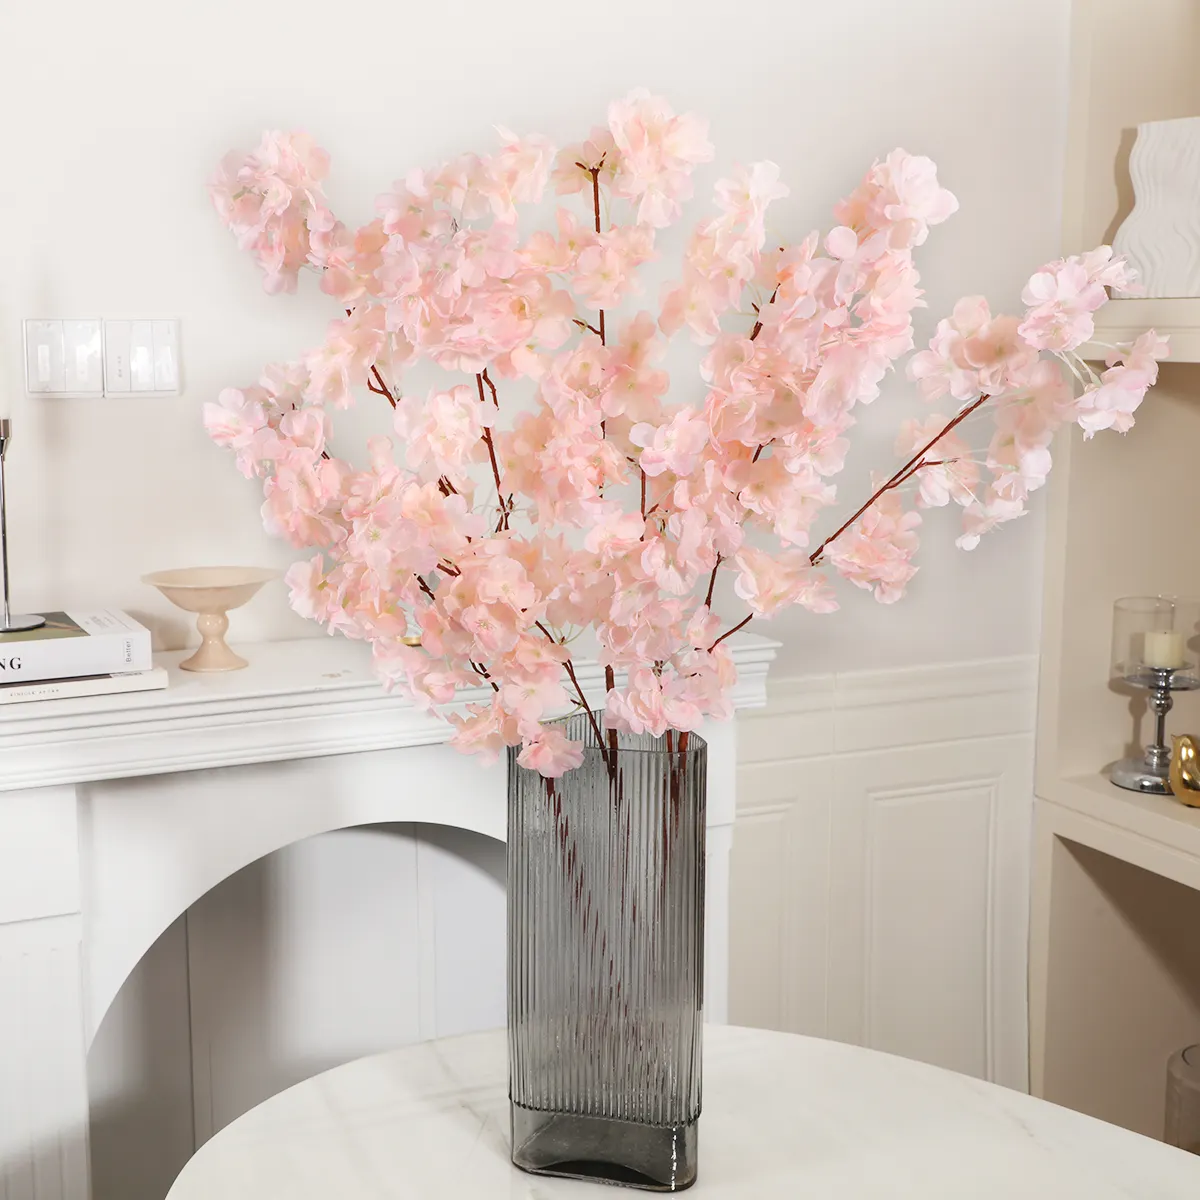 BHY0226-1 Hot Selling Polyester Cherry Blossom Tree Branch Artificial Sakura Flower For Wedding Decor